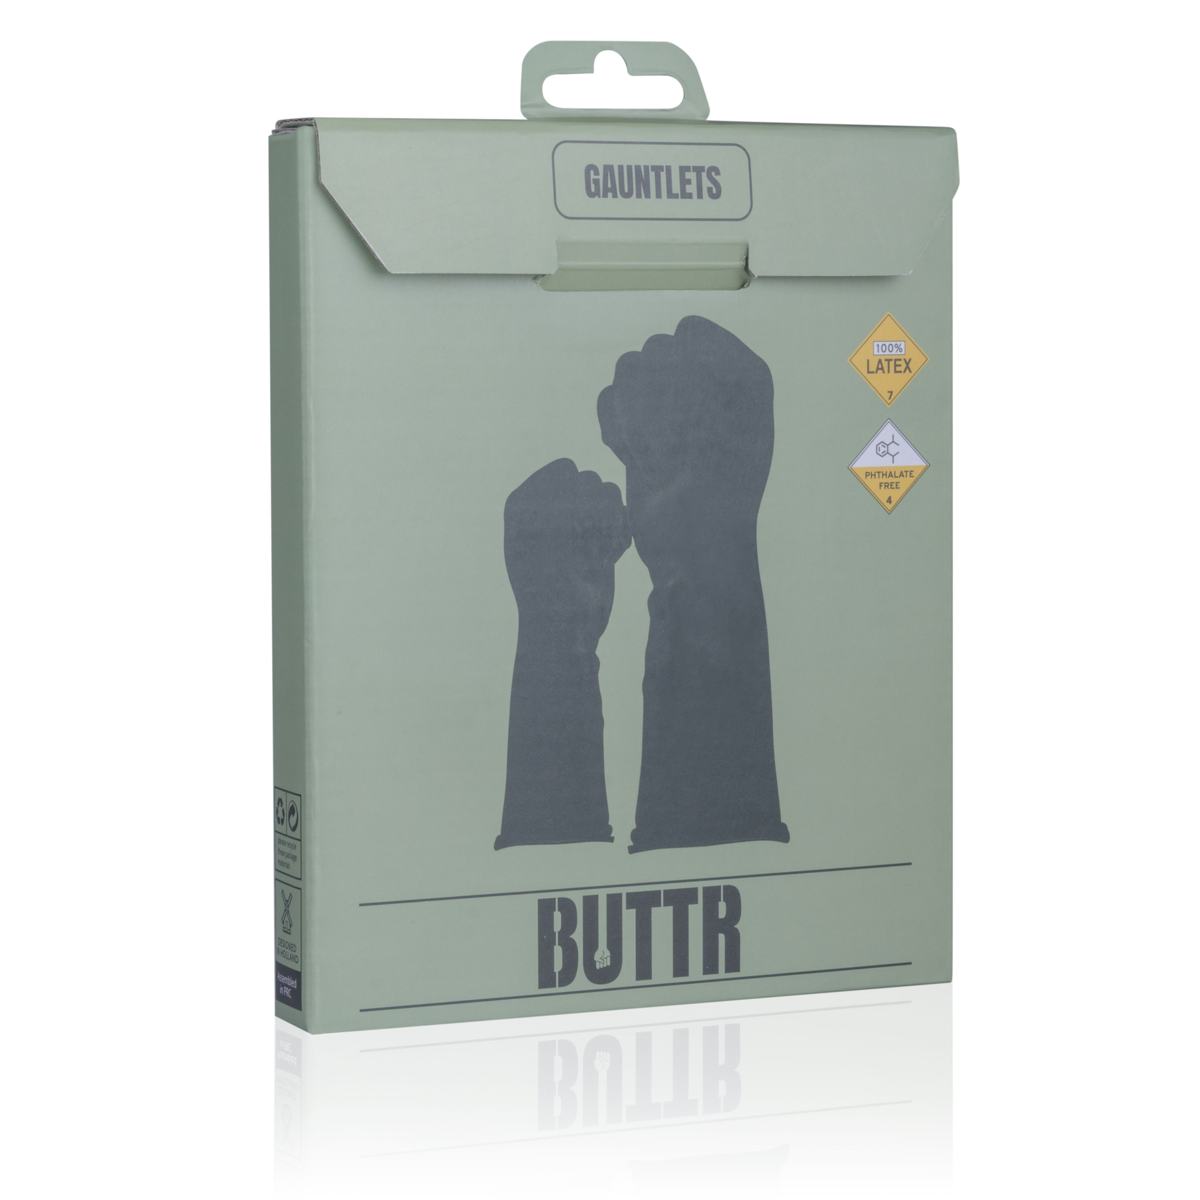 Confezione - Guanti per fisting Gauntlets Buttr